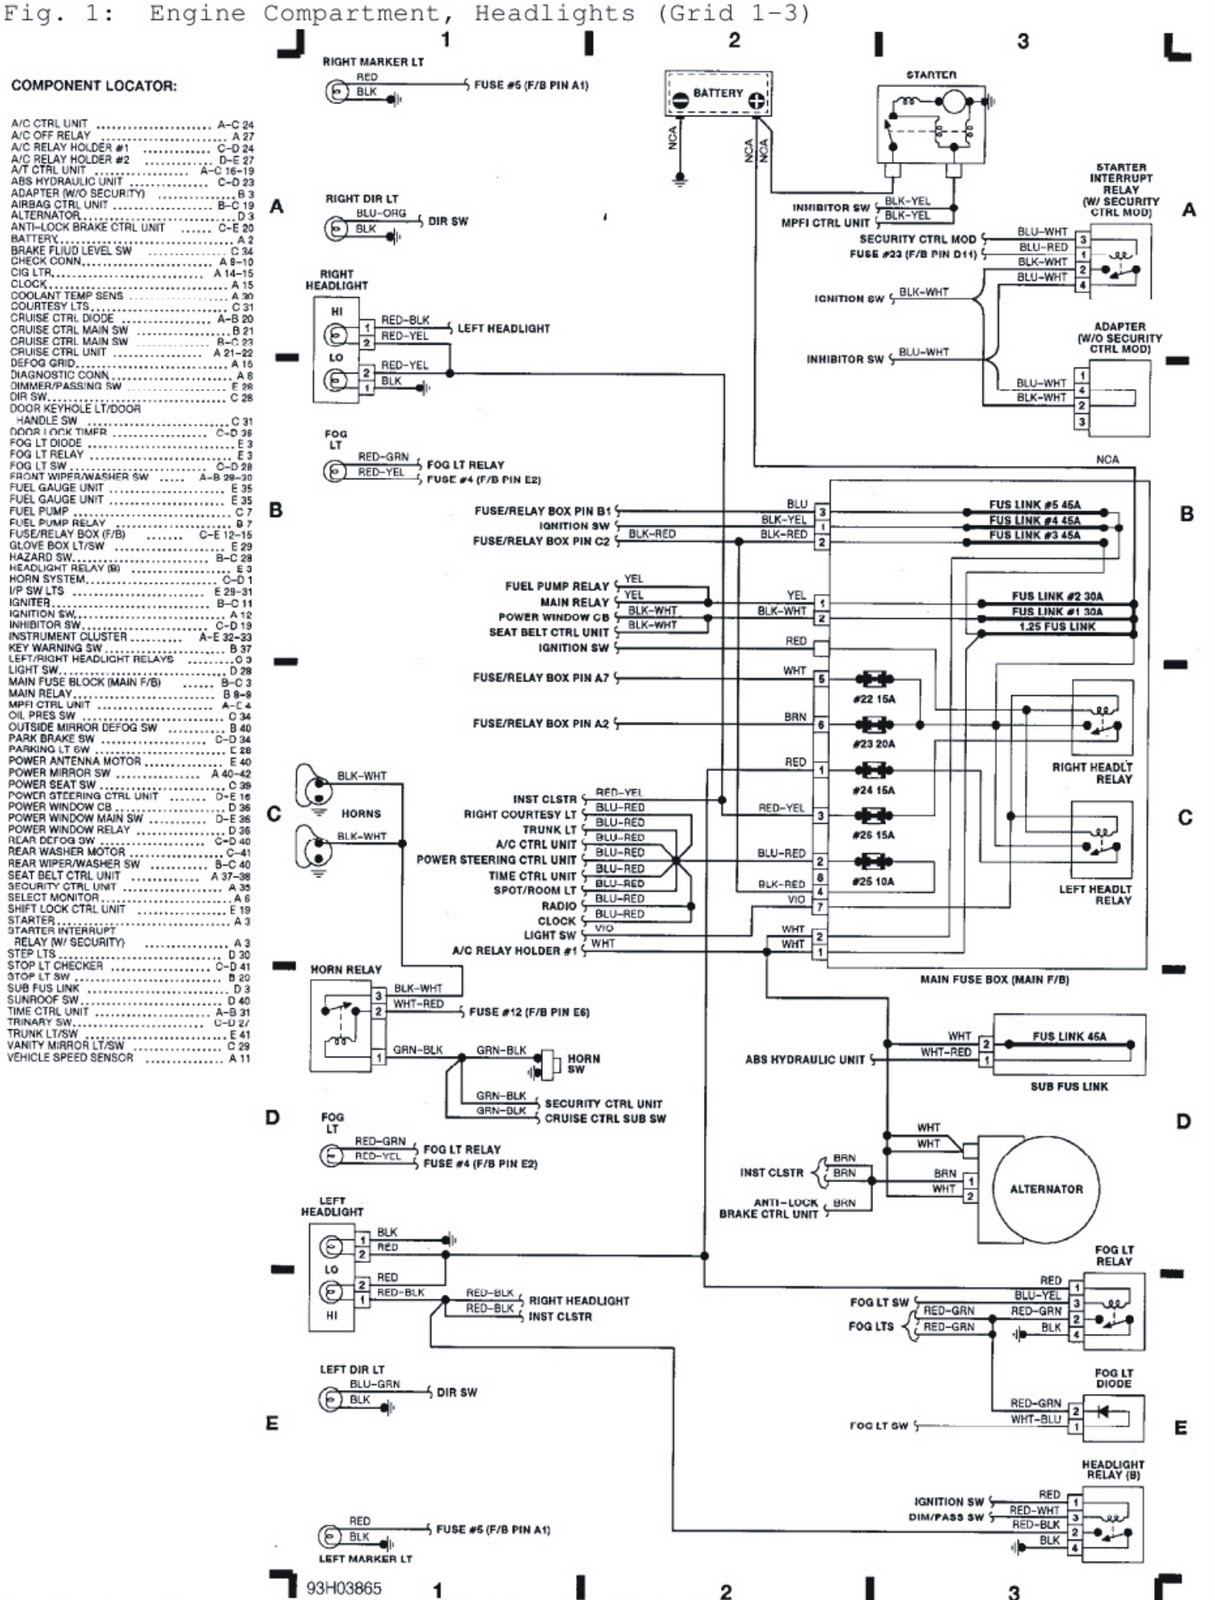 1997 Subaru Legacy Engine Diagram Diagram Subaru Legacy Engine Diagram Of 1997 Subaru Legacy Engine Diagram